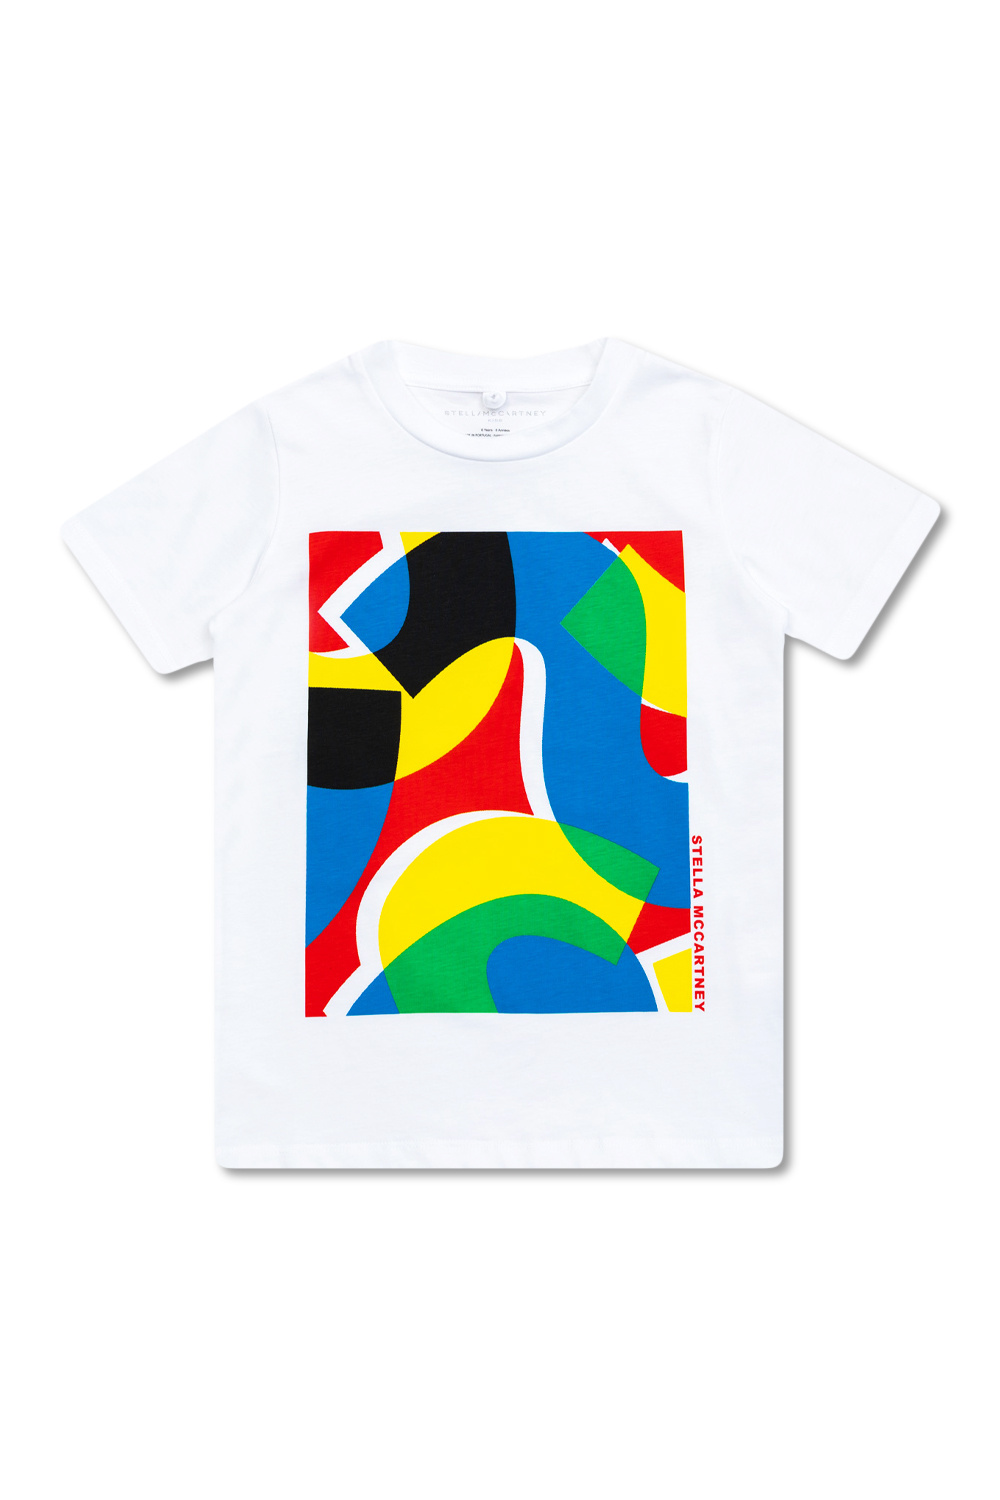 stella jessica McCartney Kids Printed T-shirt